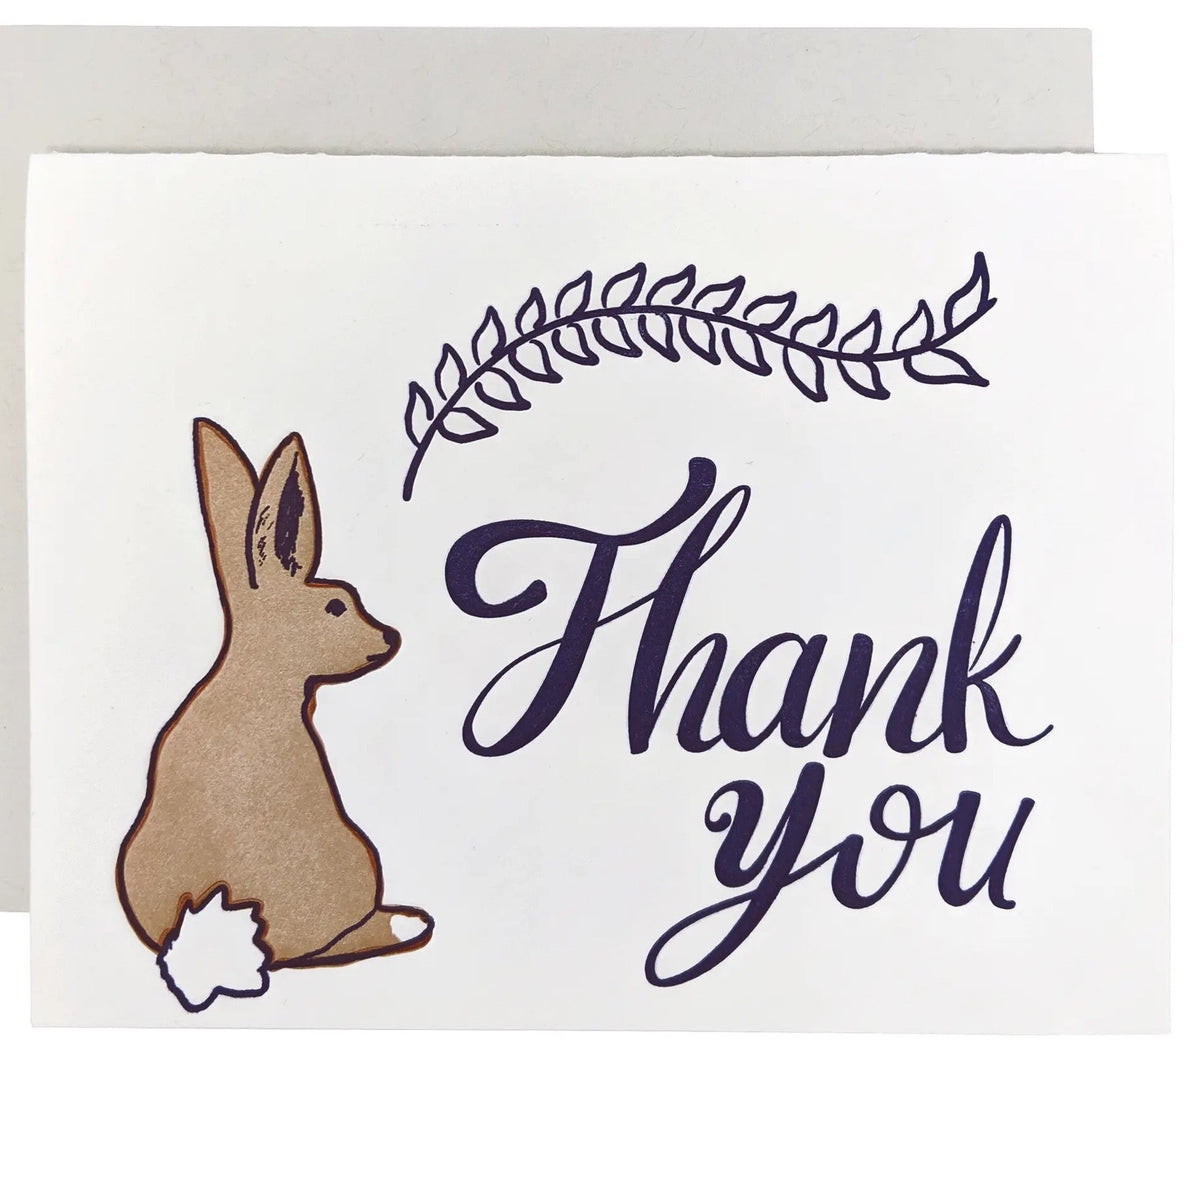 Thank You Bunny Card